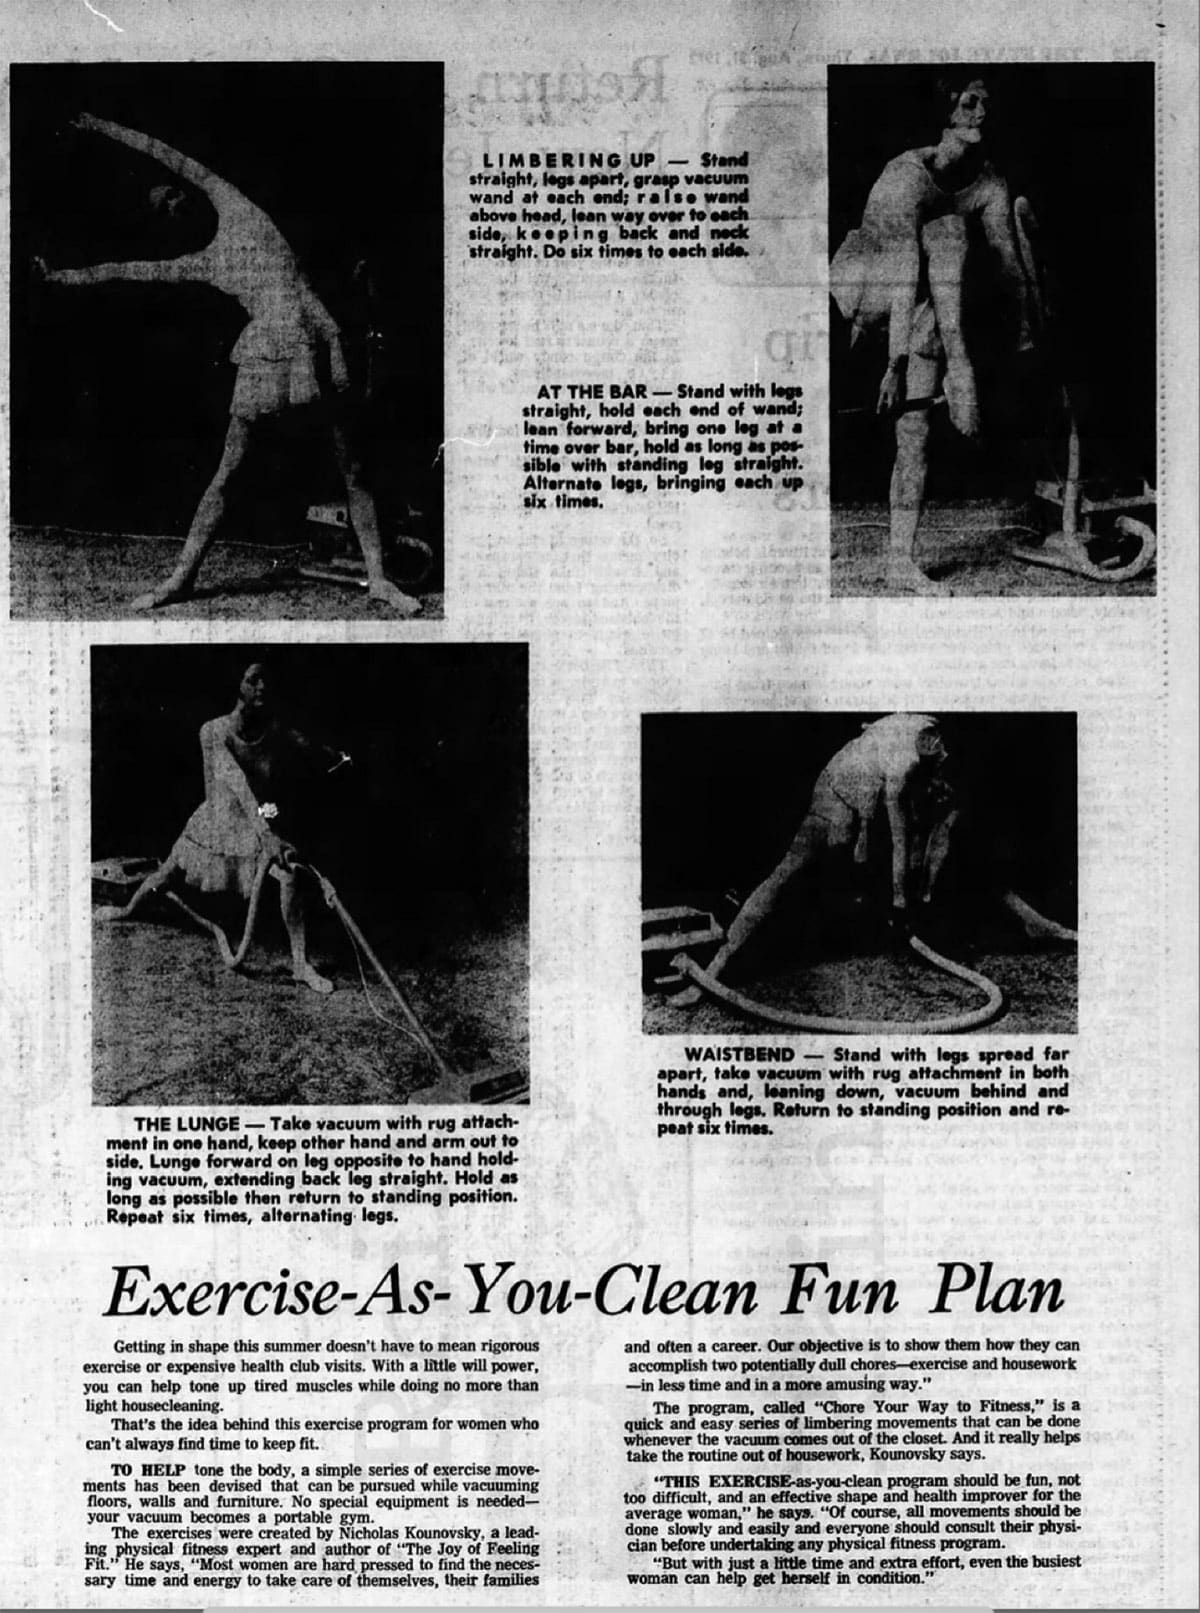 Kounovsky "Exercise-As-You-Clean Fun Plan" pilates archive article